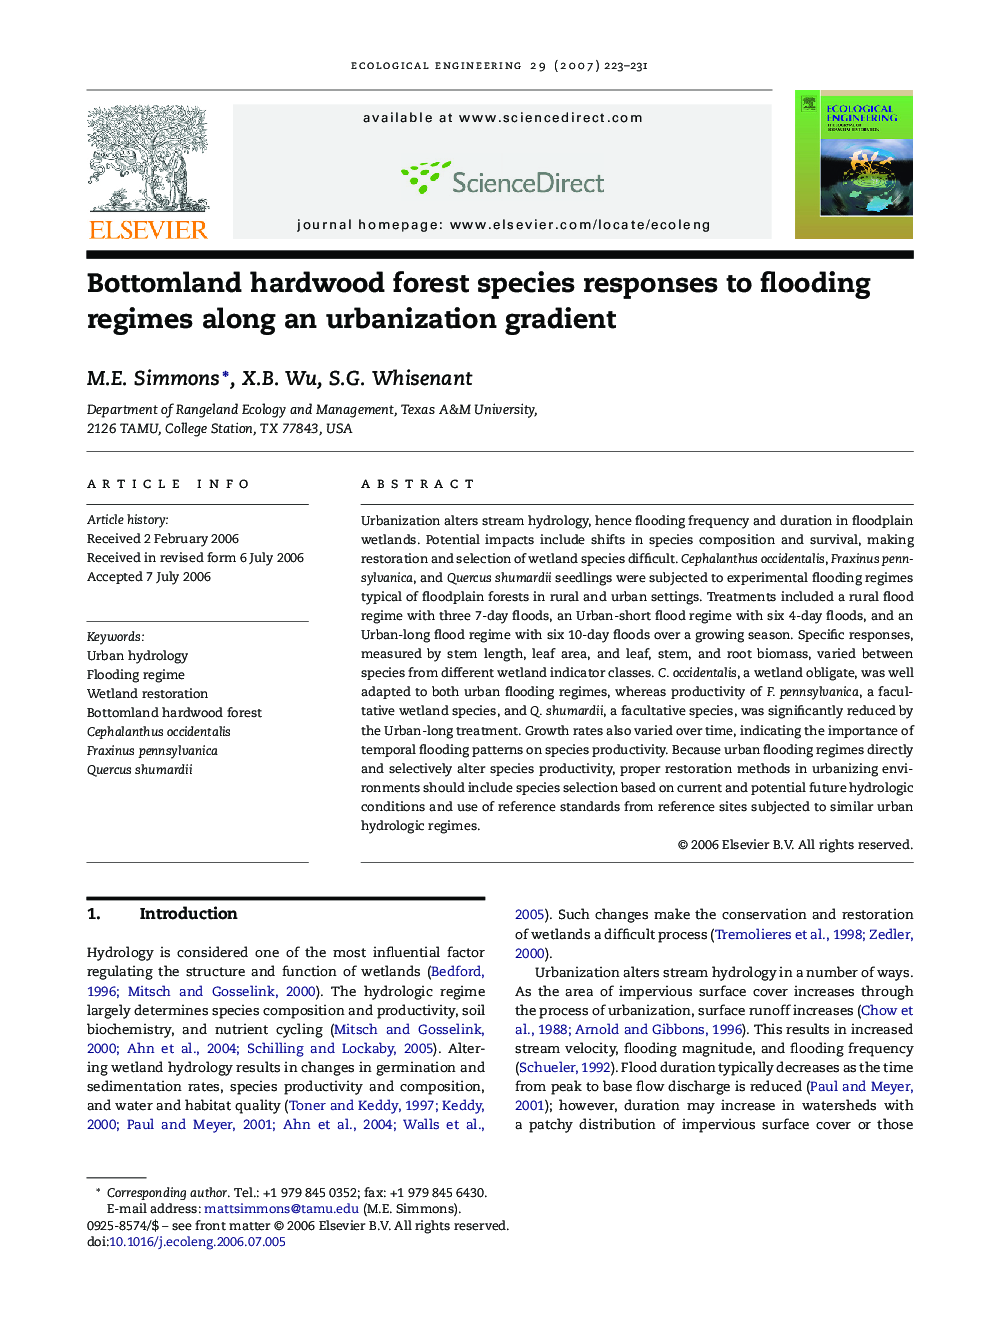 Bottomland hardwood forest species responses to flooding regimes along an urbanization gradient